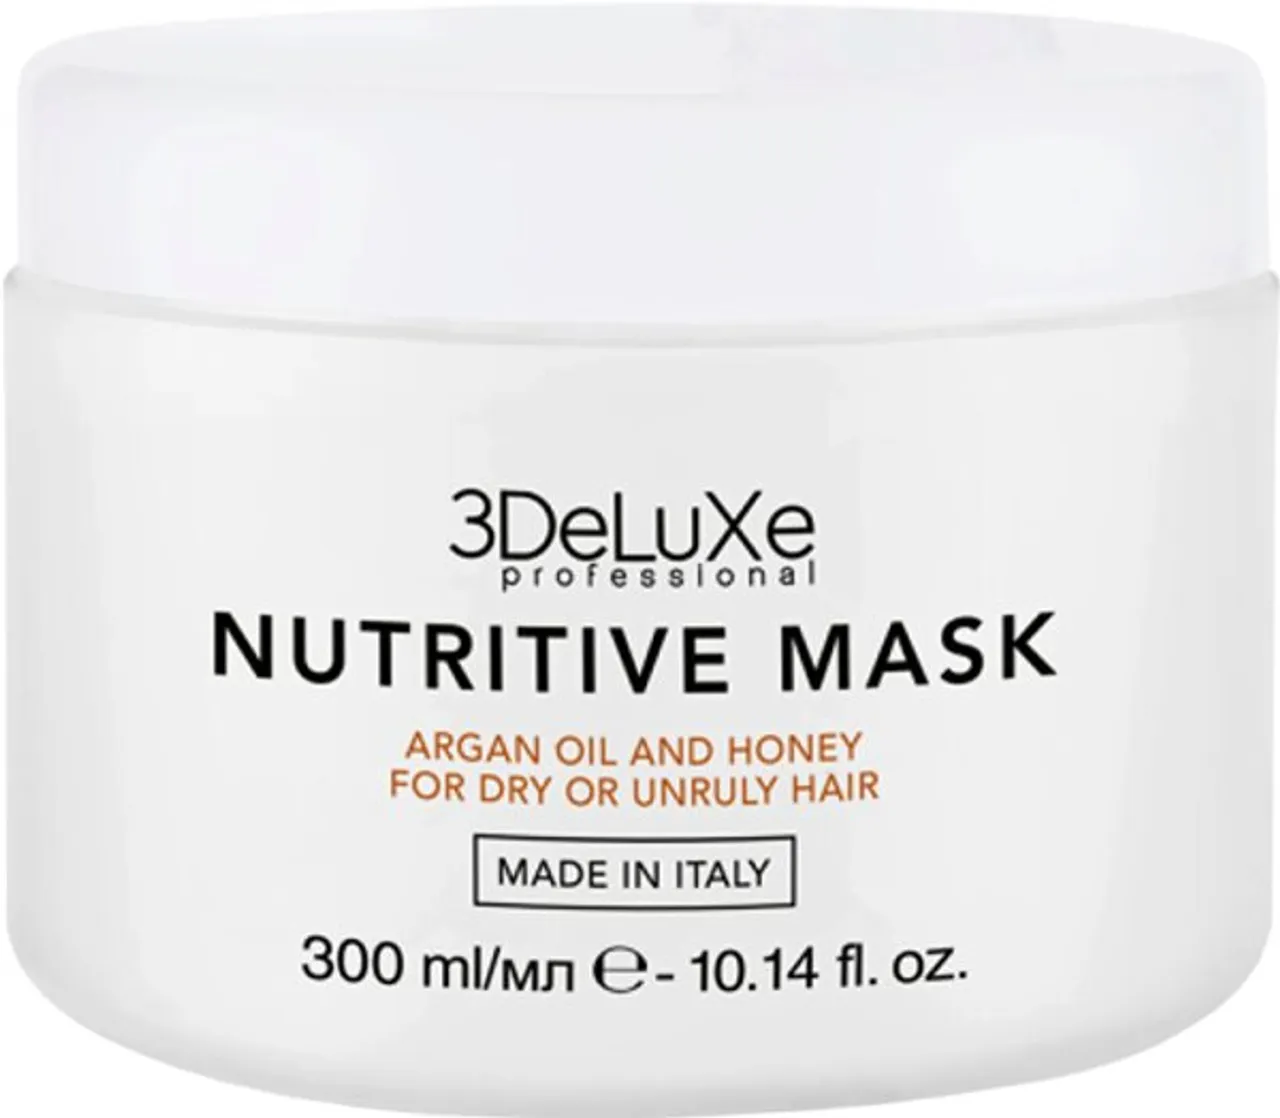 3Deluxe Nutritive Mask 300 ml